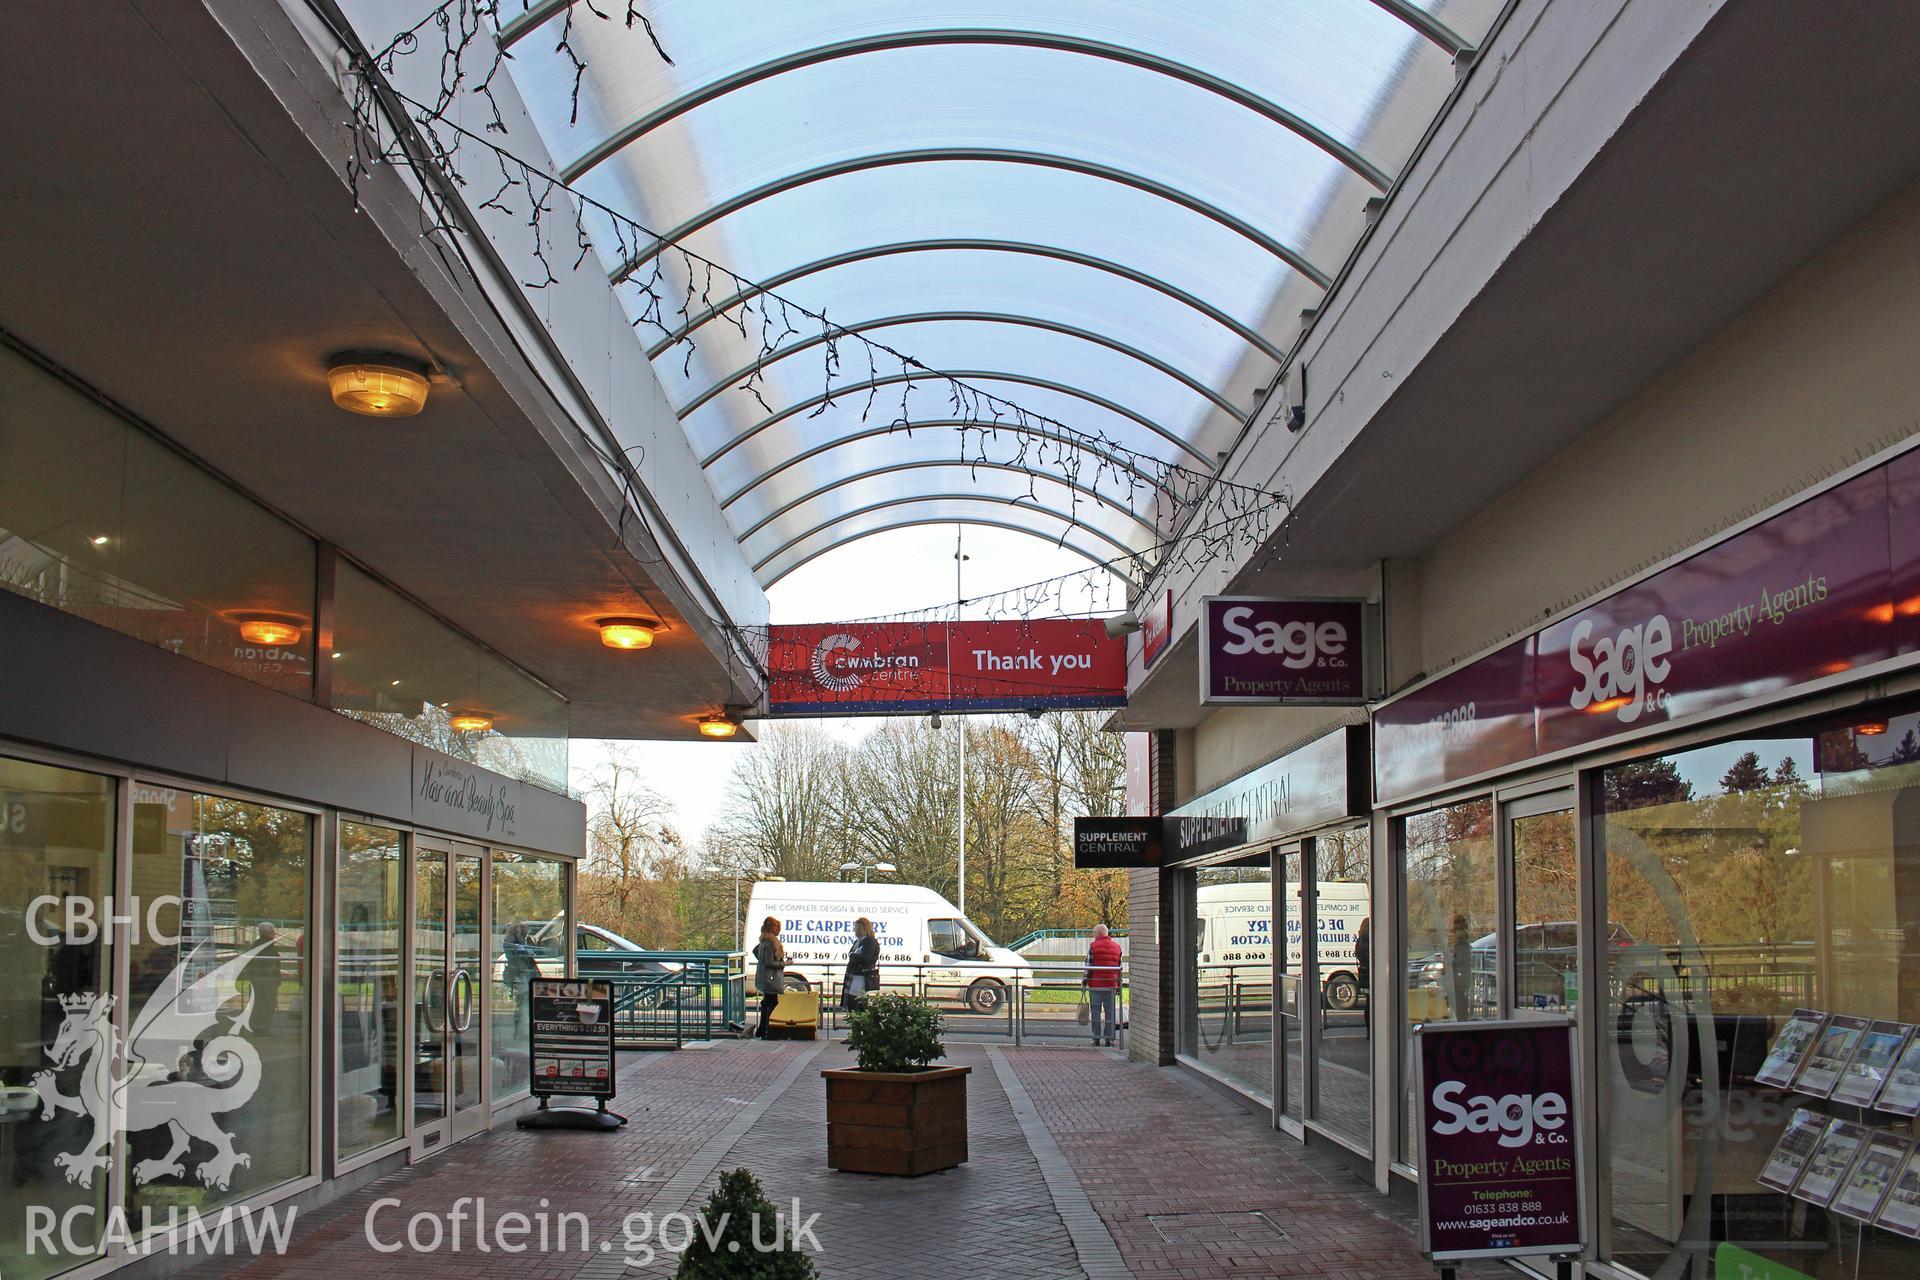 Internal view of Cwmbran Shopping Centre. Photograph taken by Sue Fielding in November 2017.